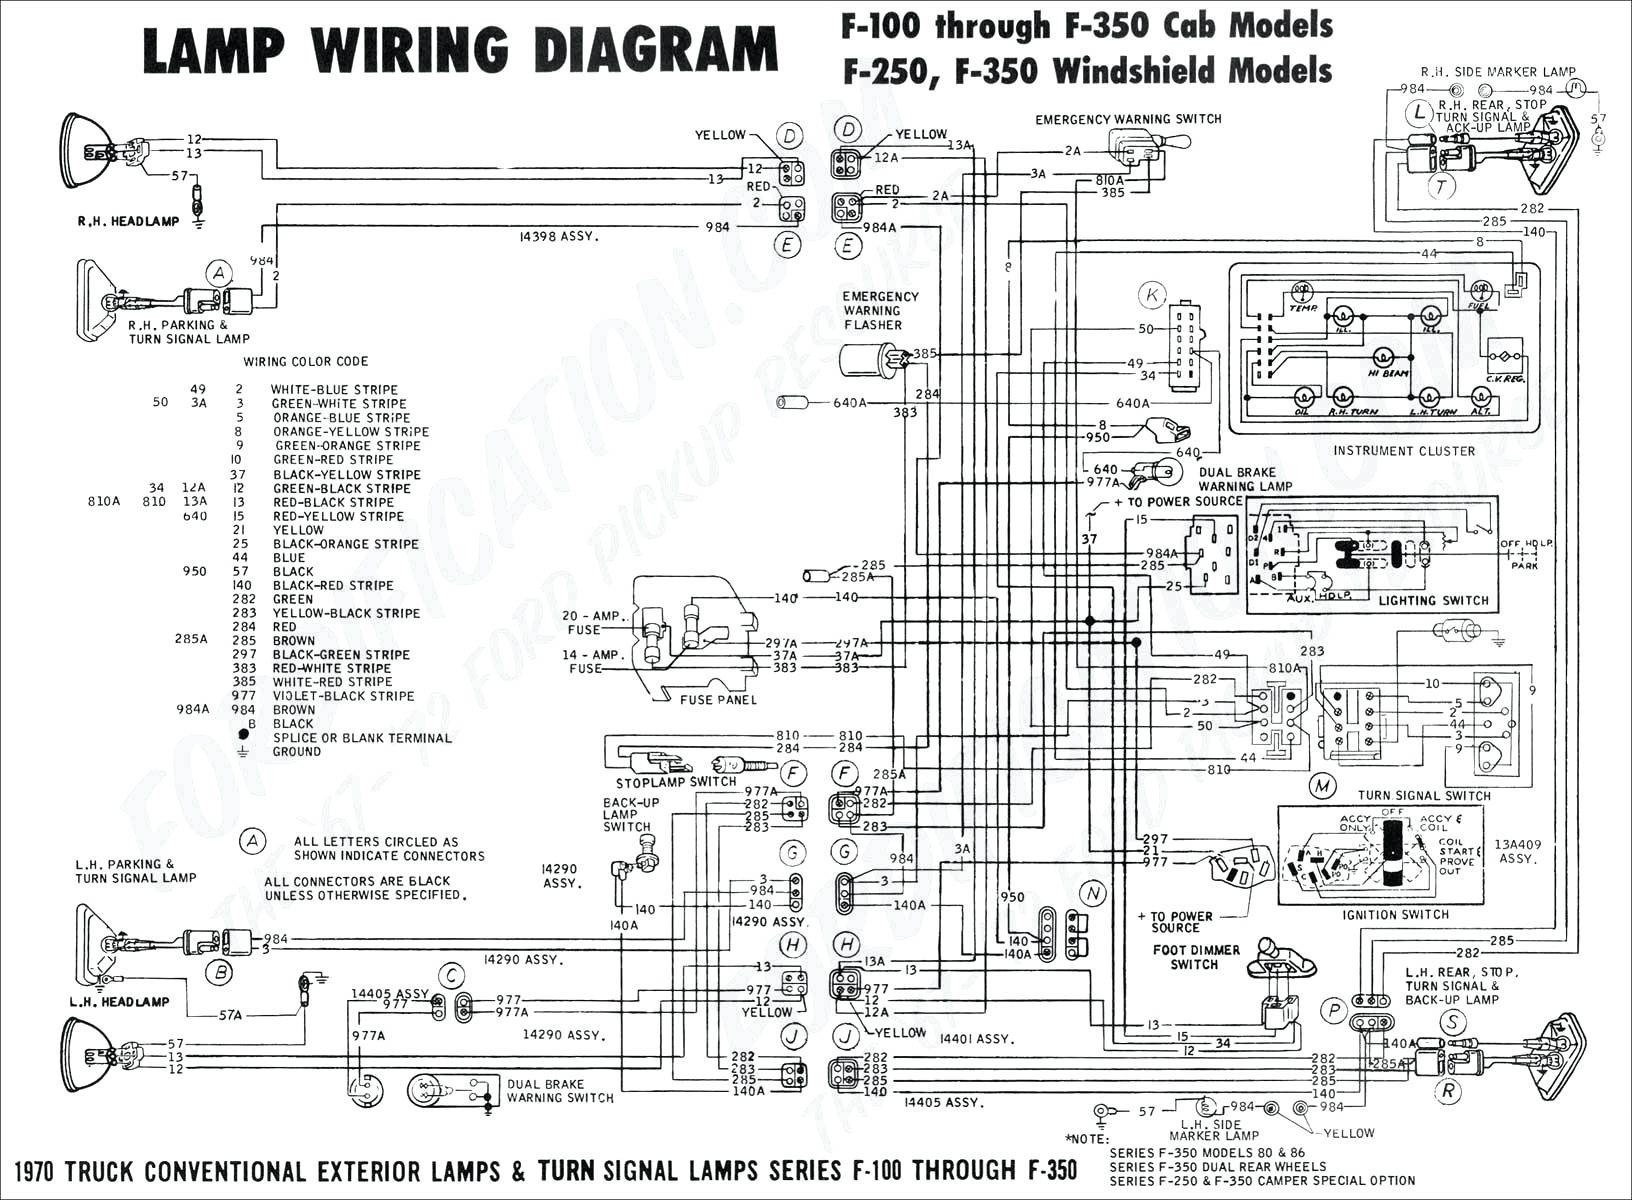 Turn Signal Switch Wiring Diagram aftermarket Turn Signal Wiring Diagram Of Turn Signal Switch Wiring Diagram